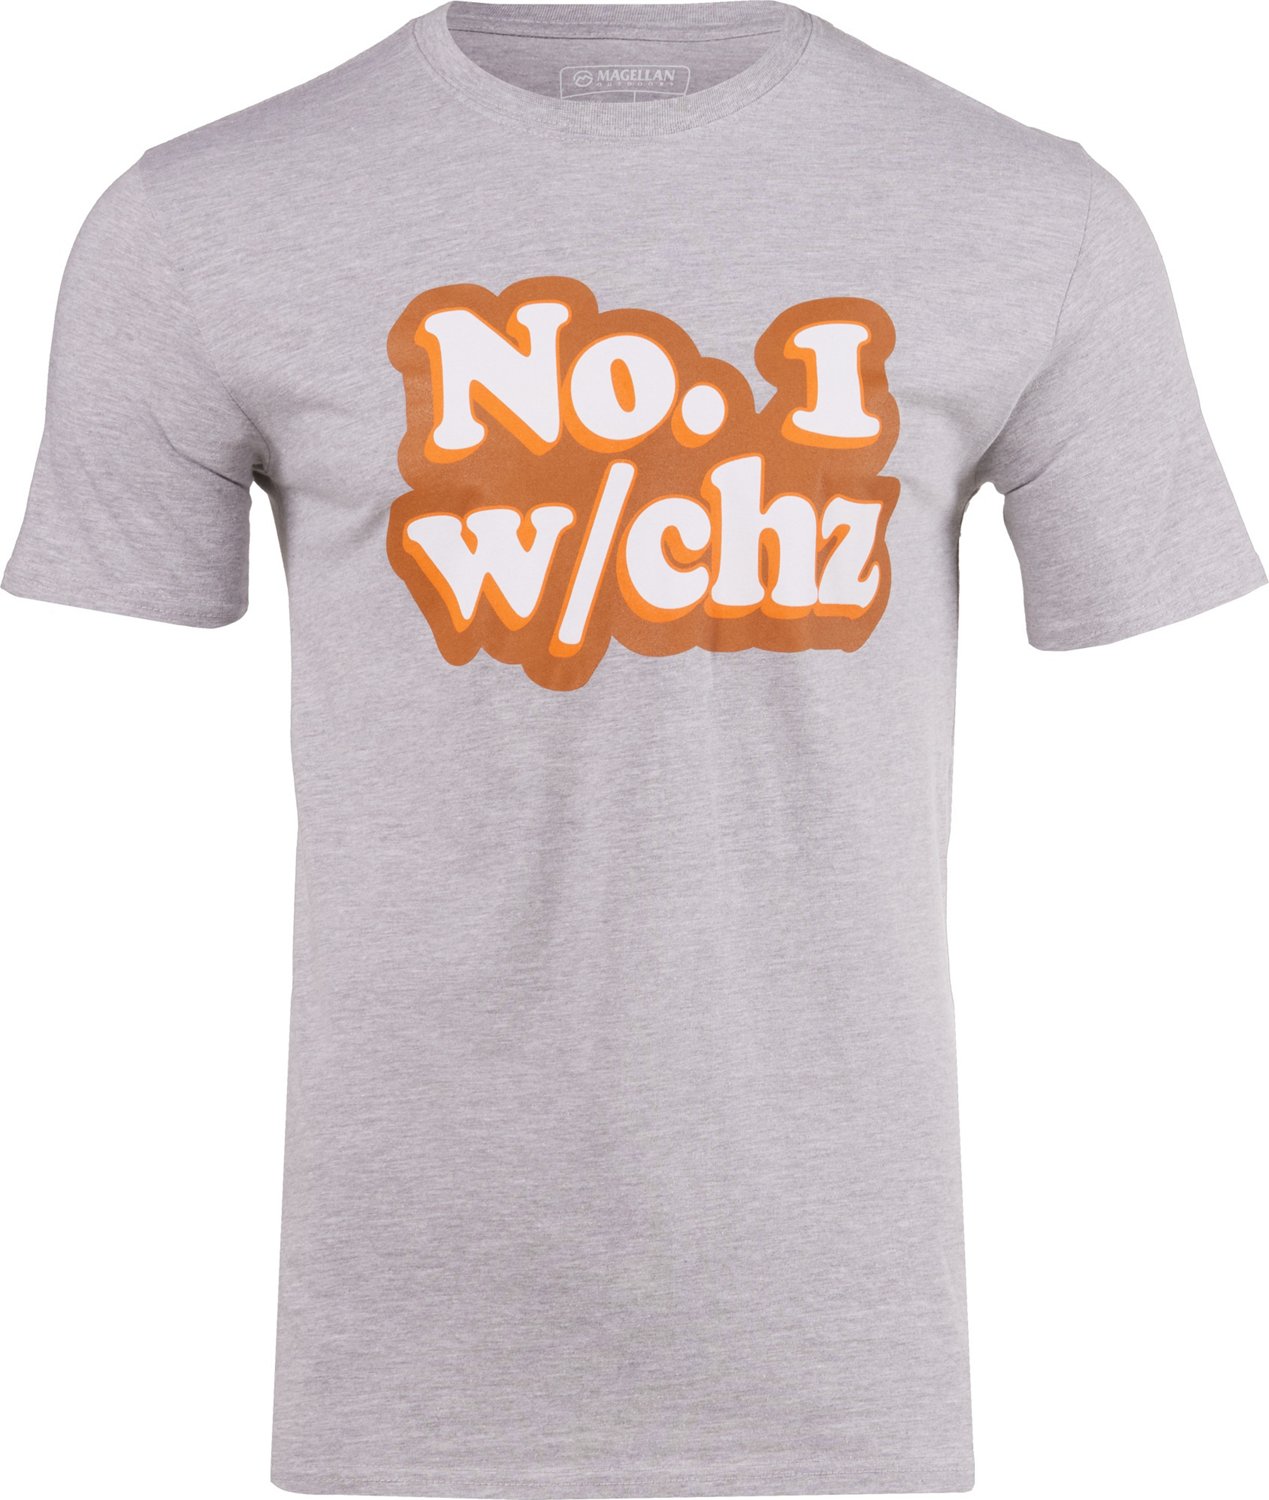 Whata-shirt! Academy releases new Whataburger, Magellan clothing line